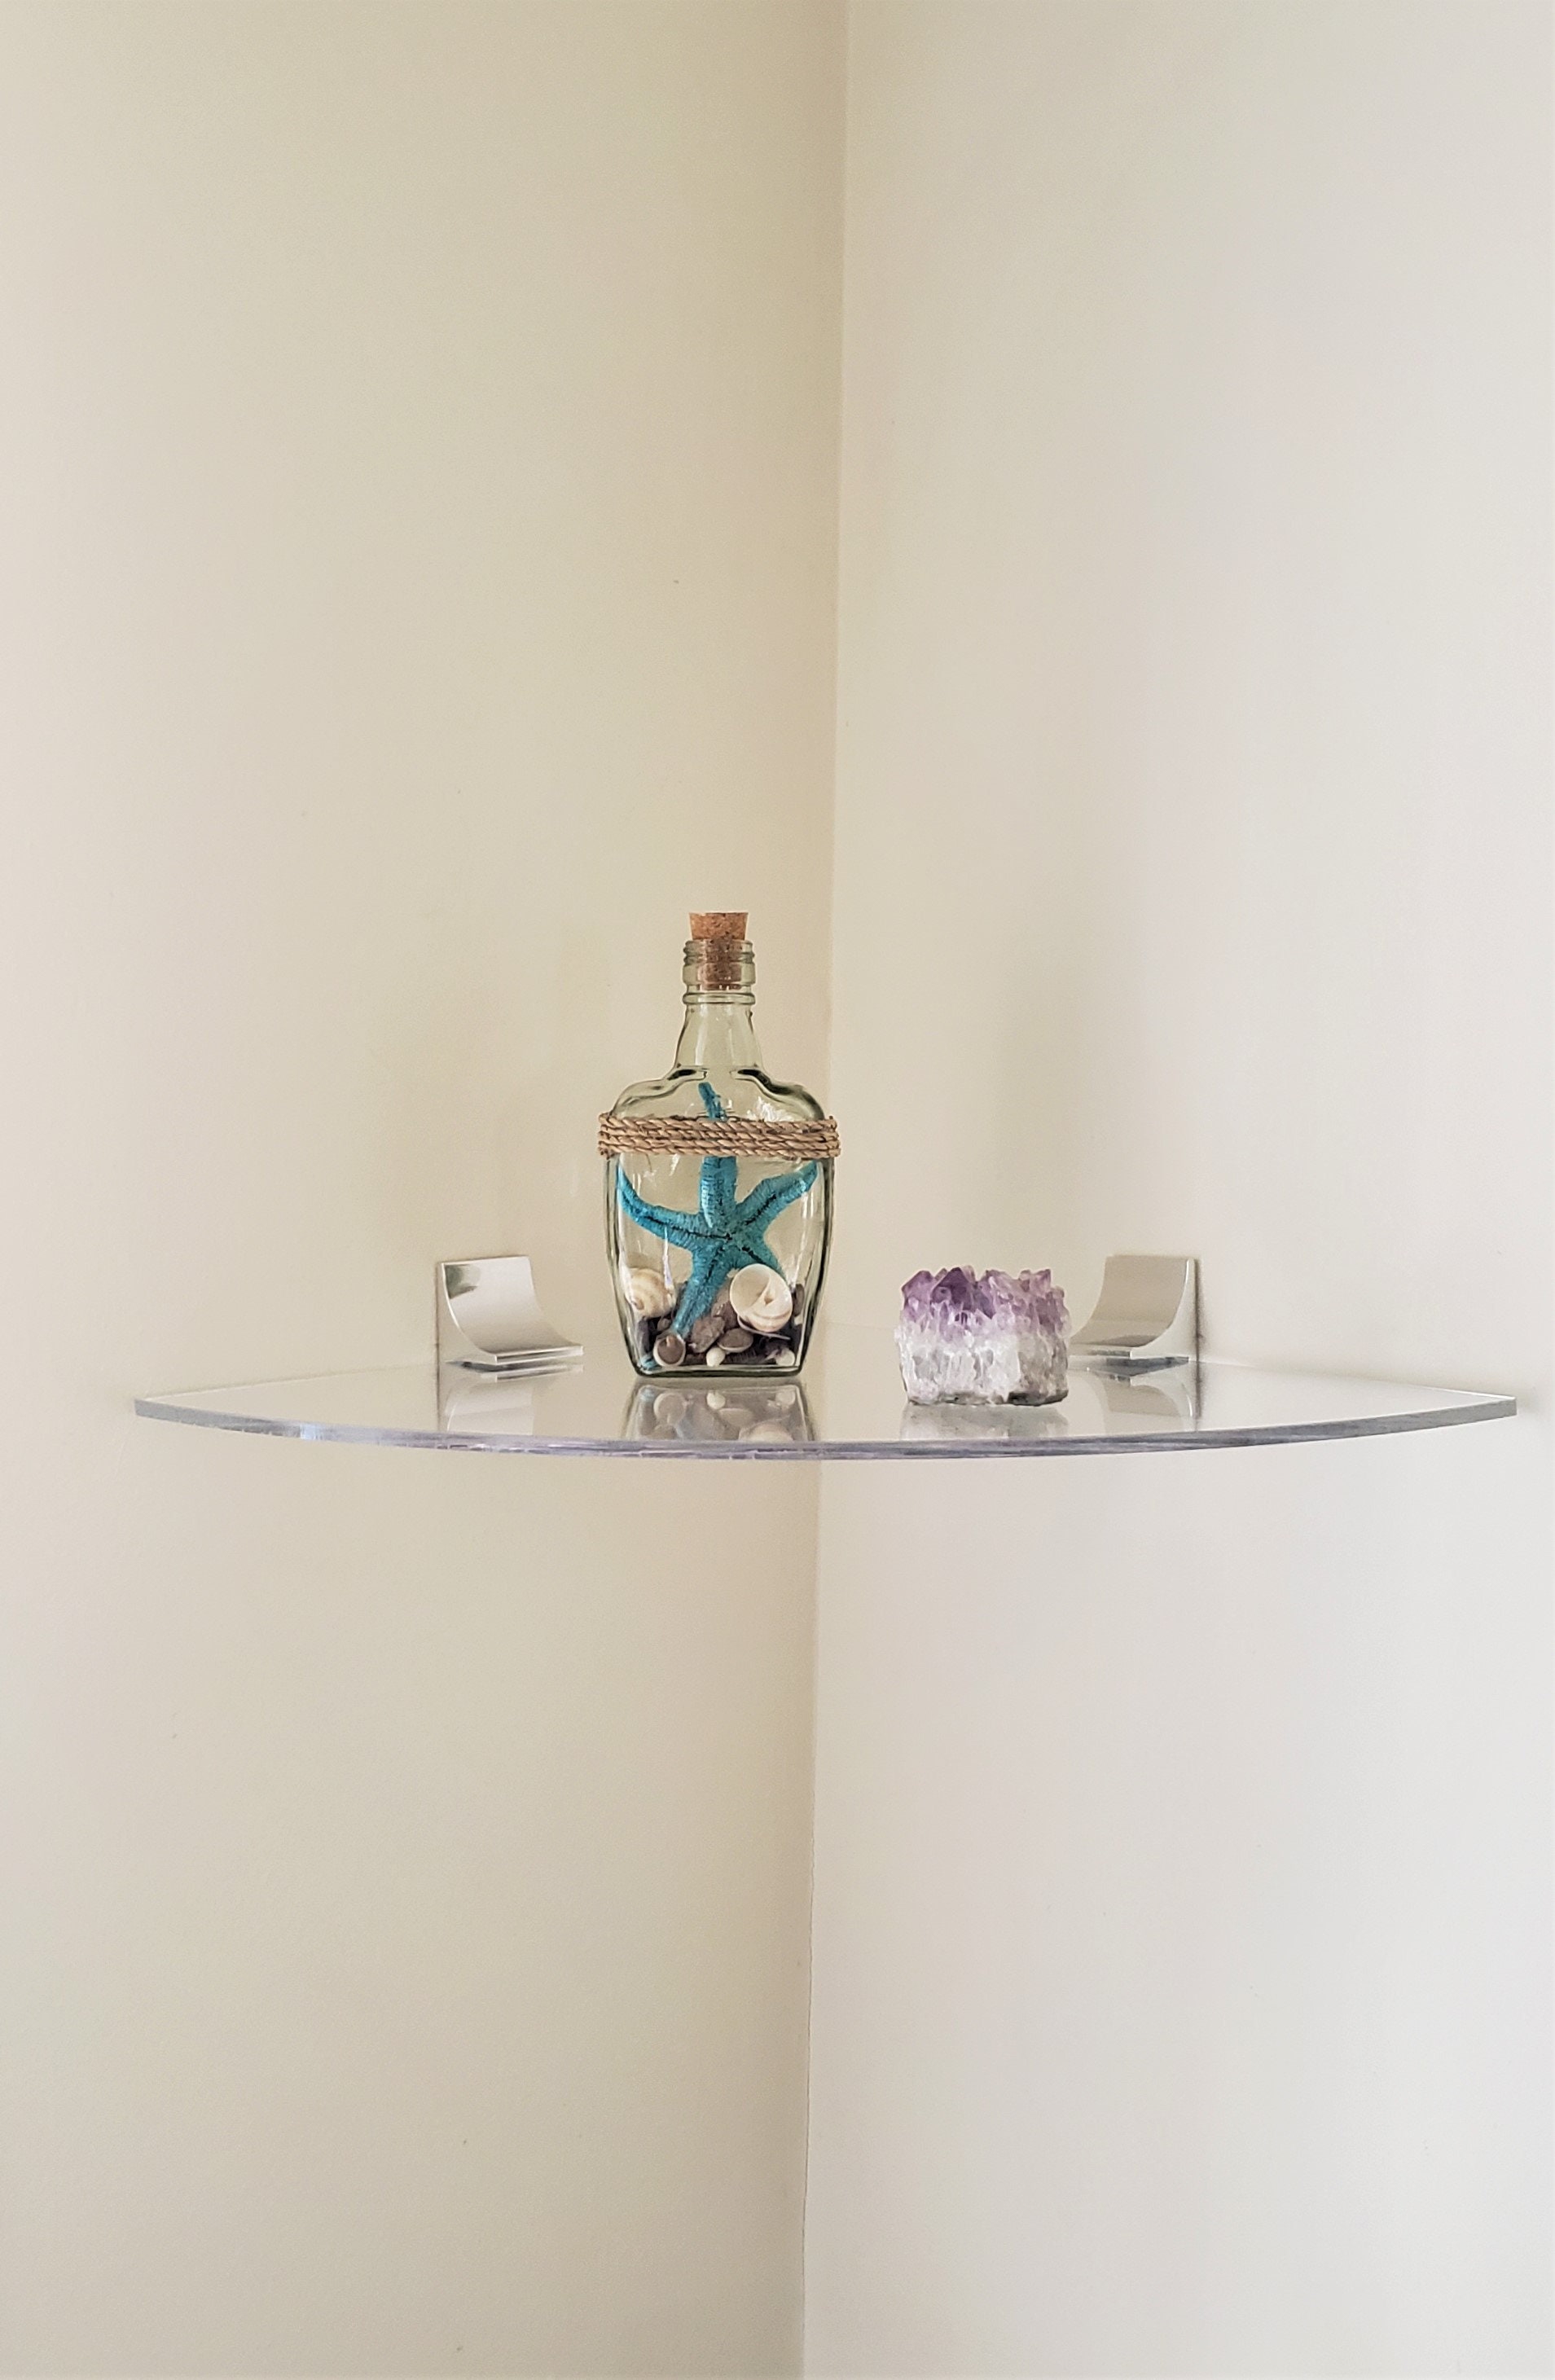 Buy Acrylic Lucite Clear Bathroom Corner Shelf from Shenzhen